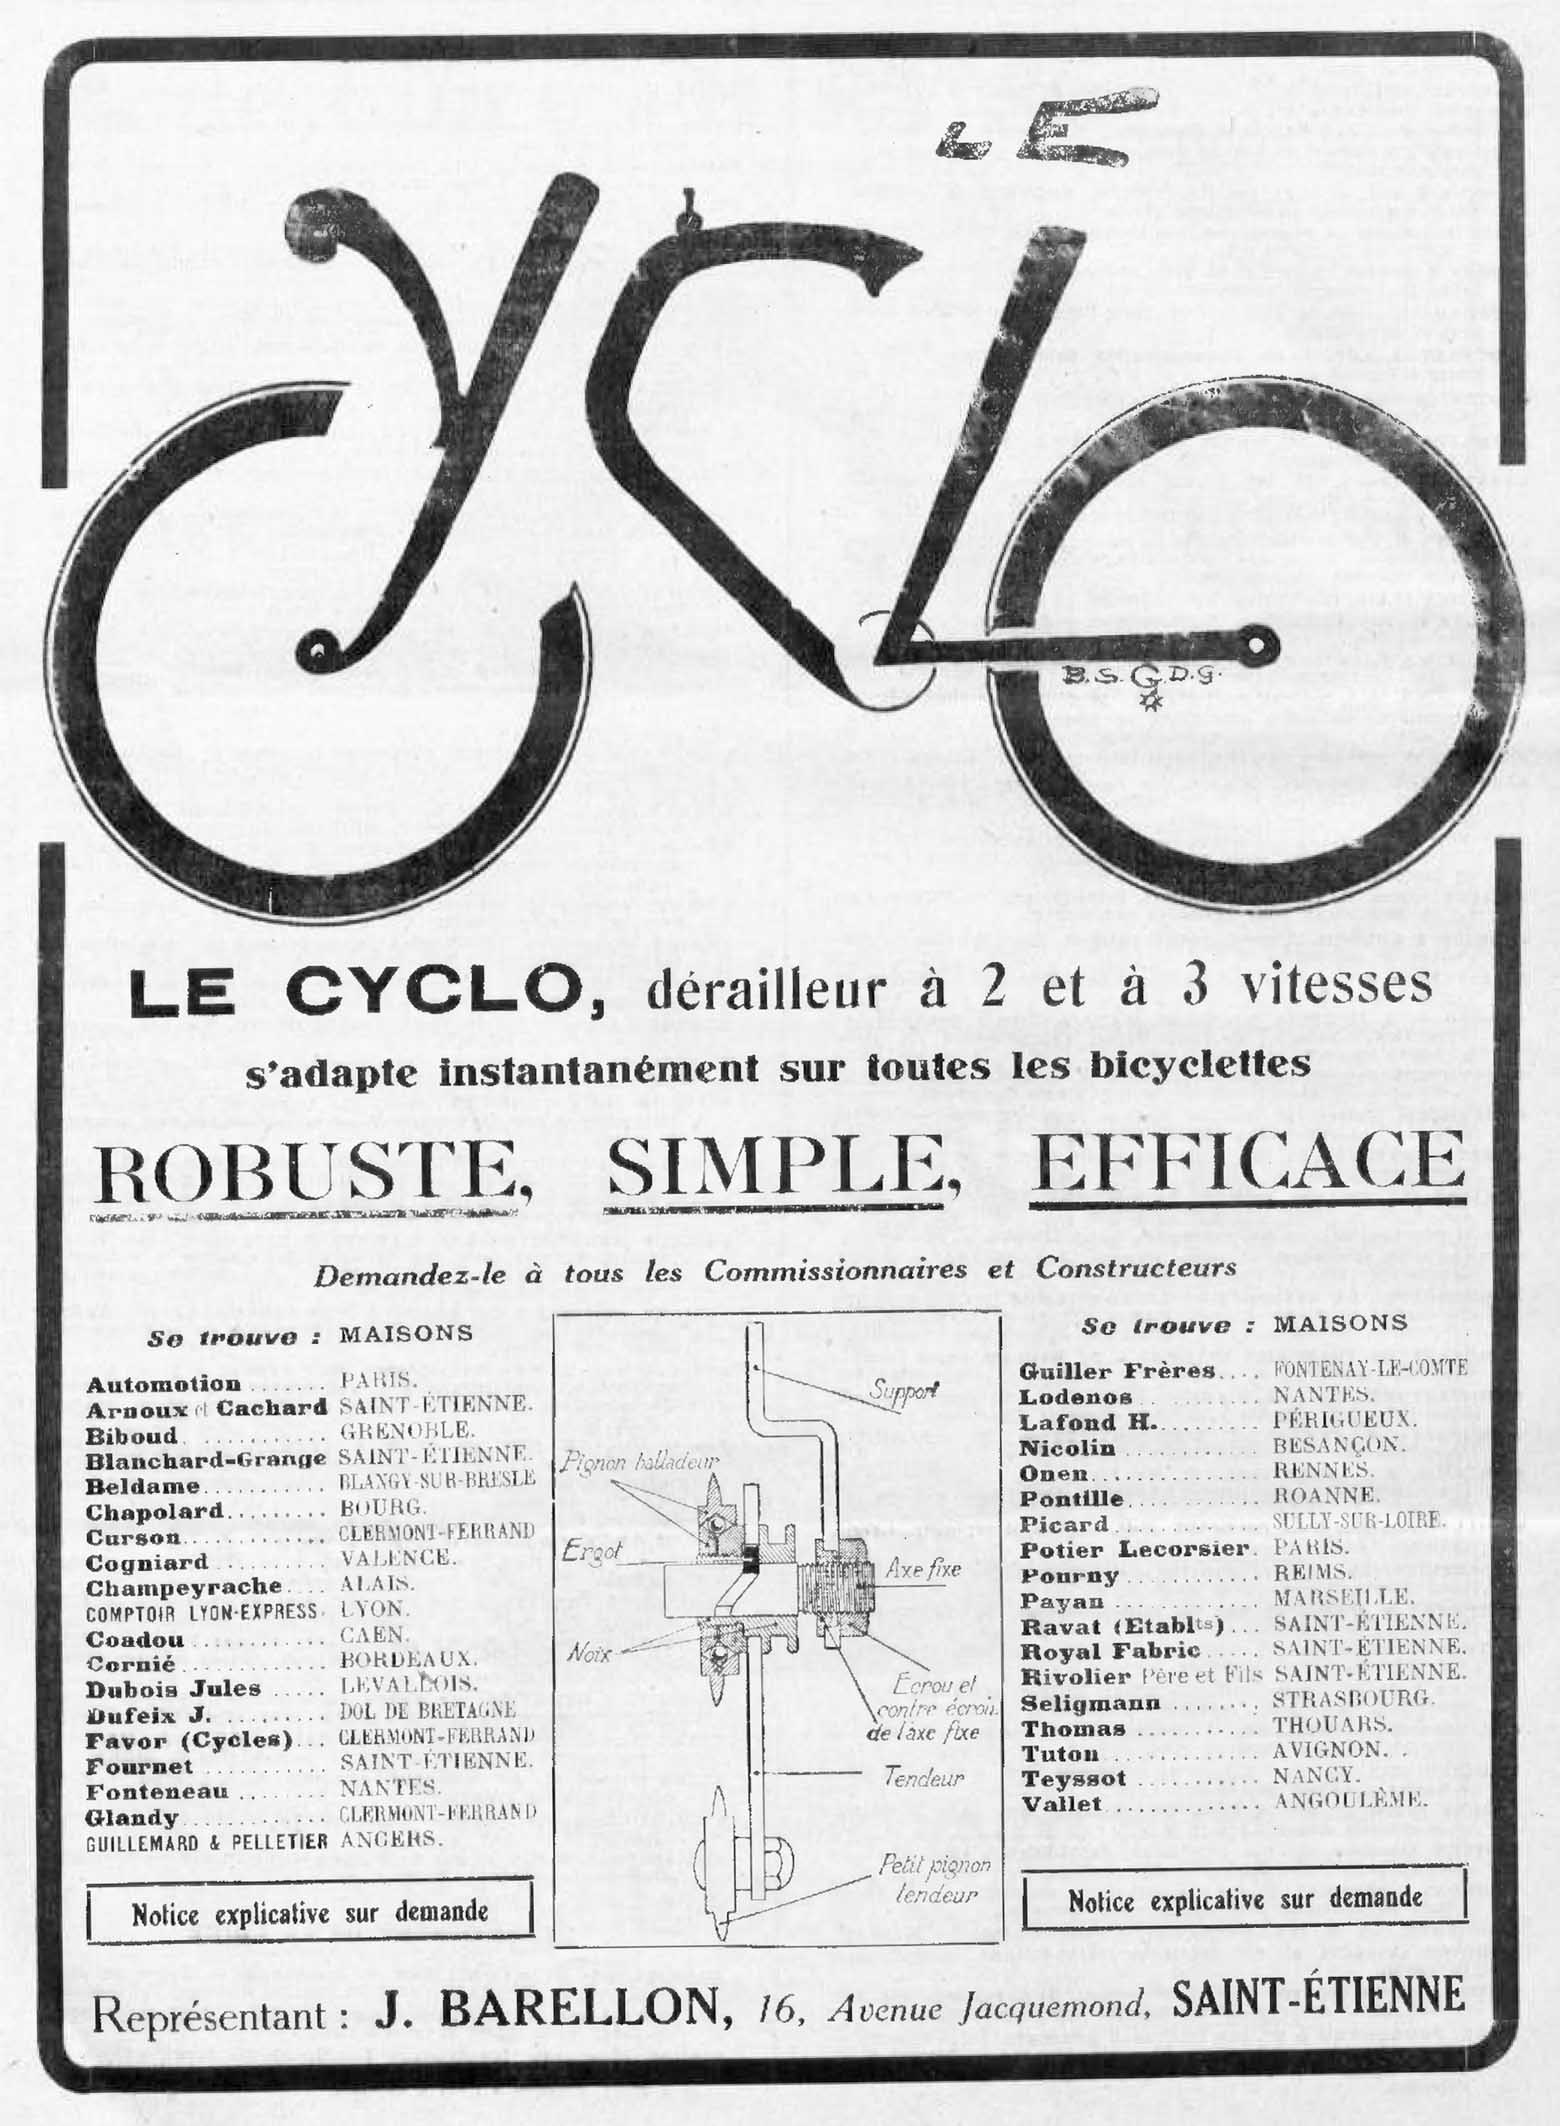 L'Industrie des Cycles et Automobiles January 1925 - Cyclo advert main image